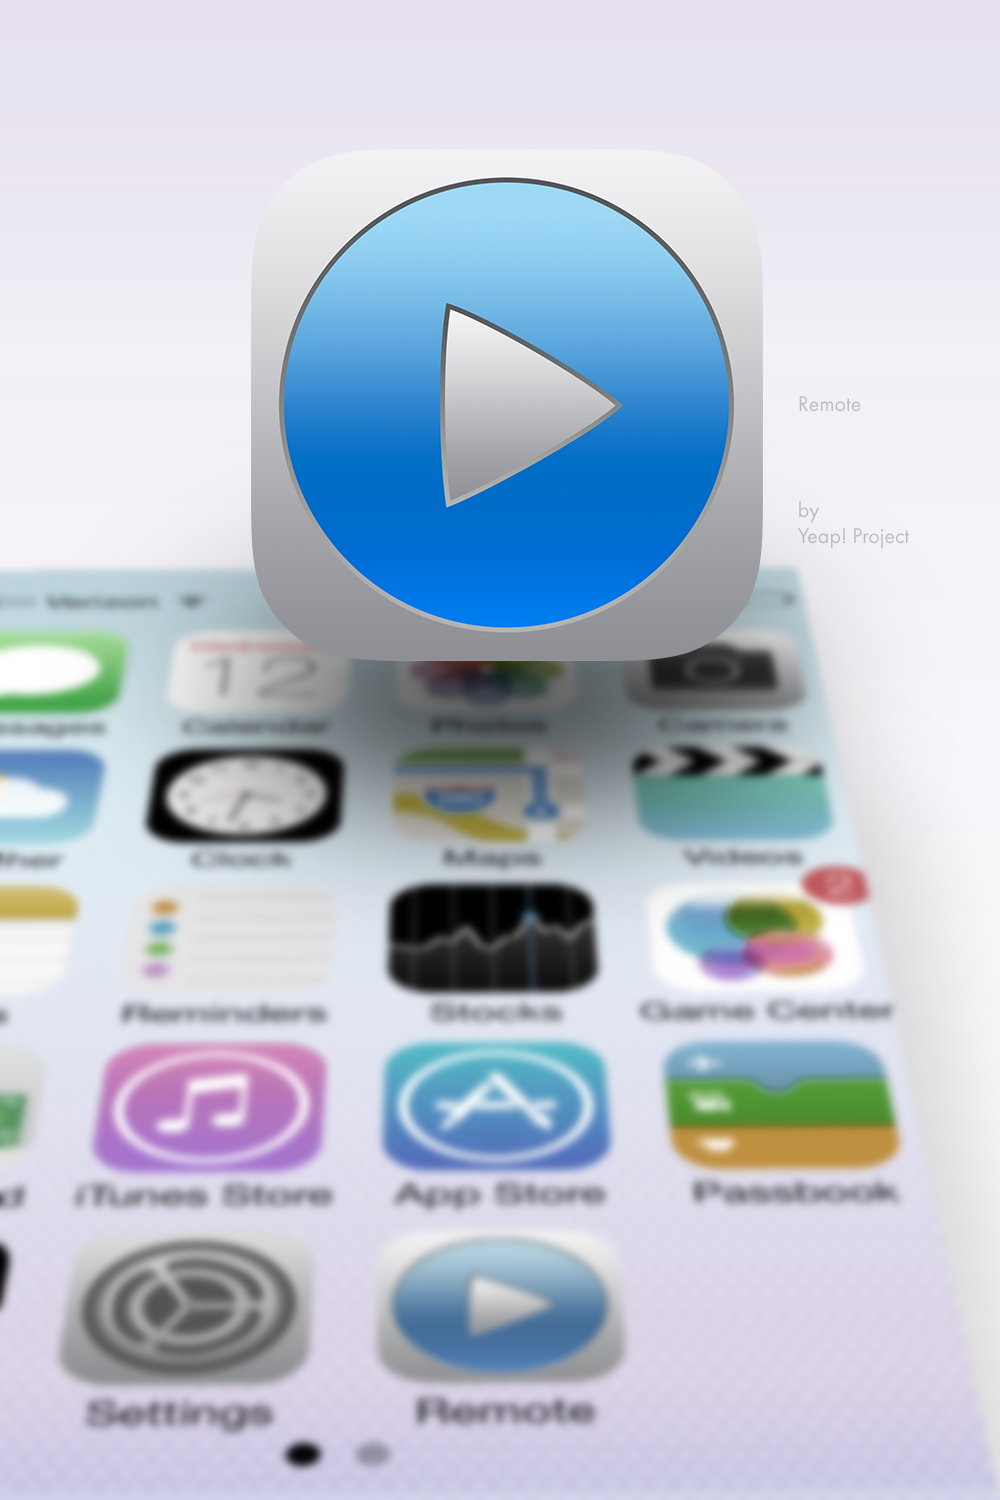 remote ios7 apple UI flat Icon redesign concept